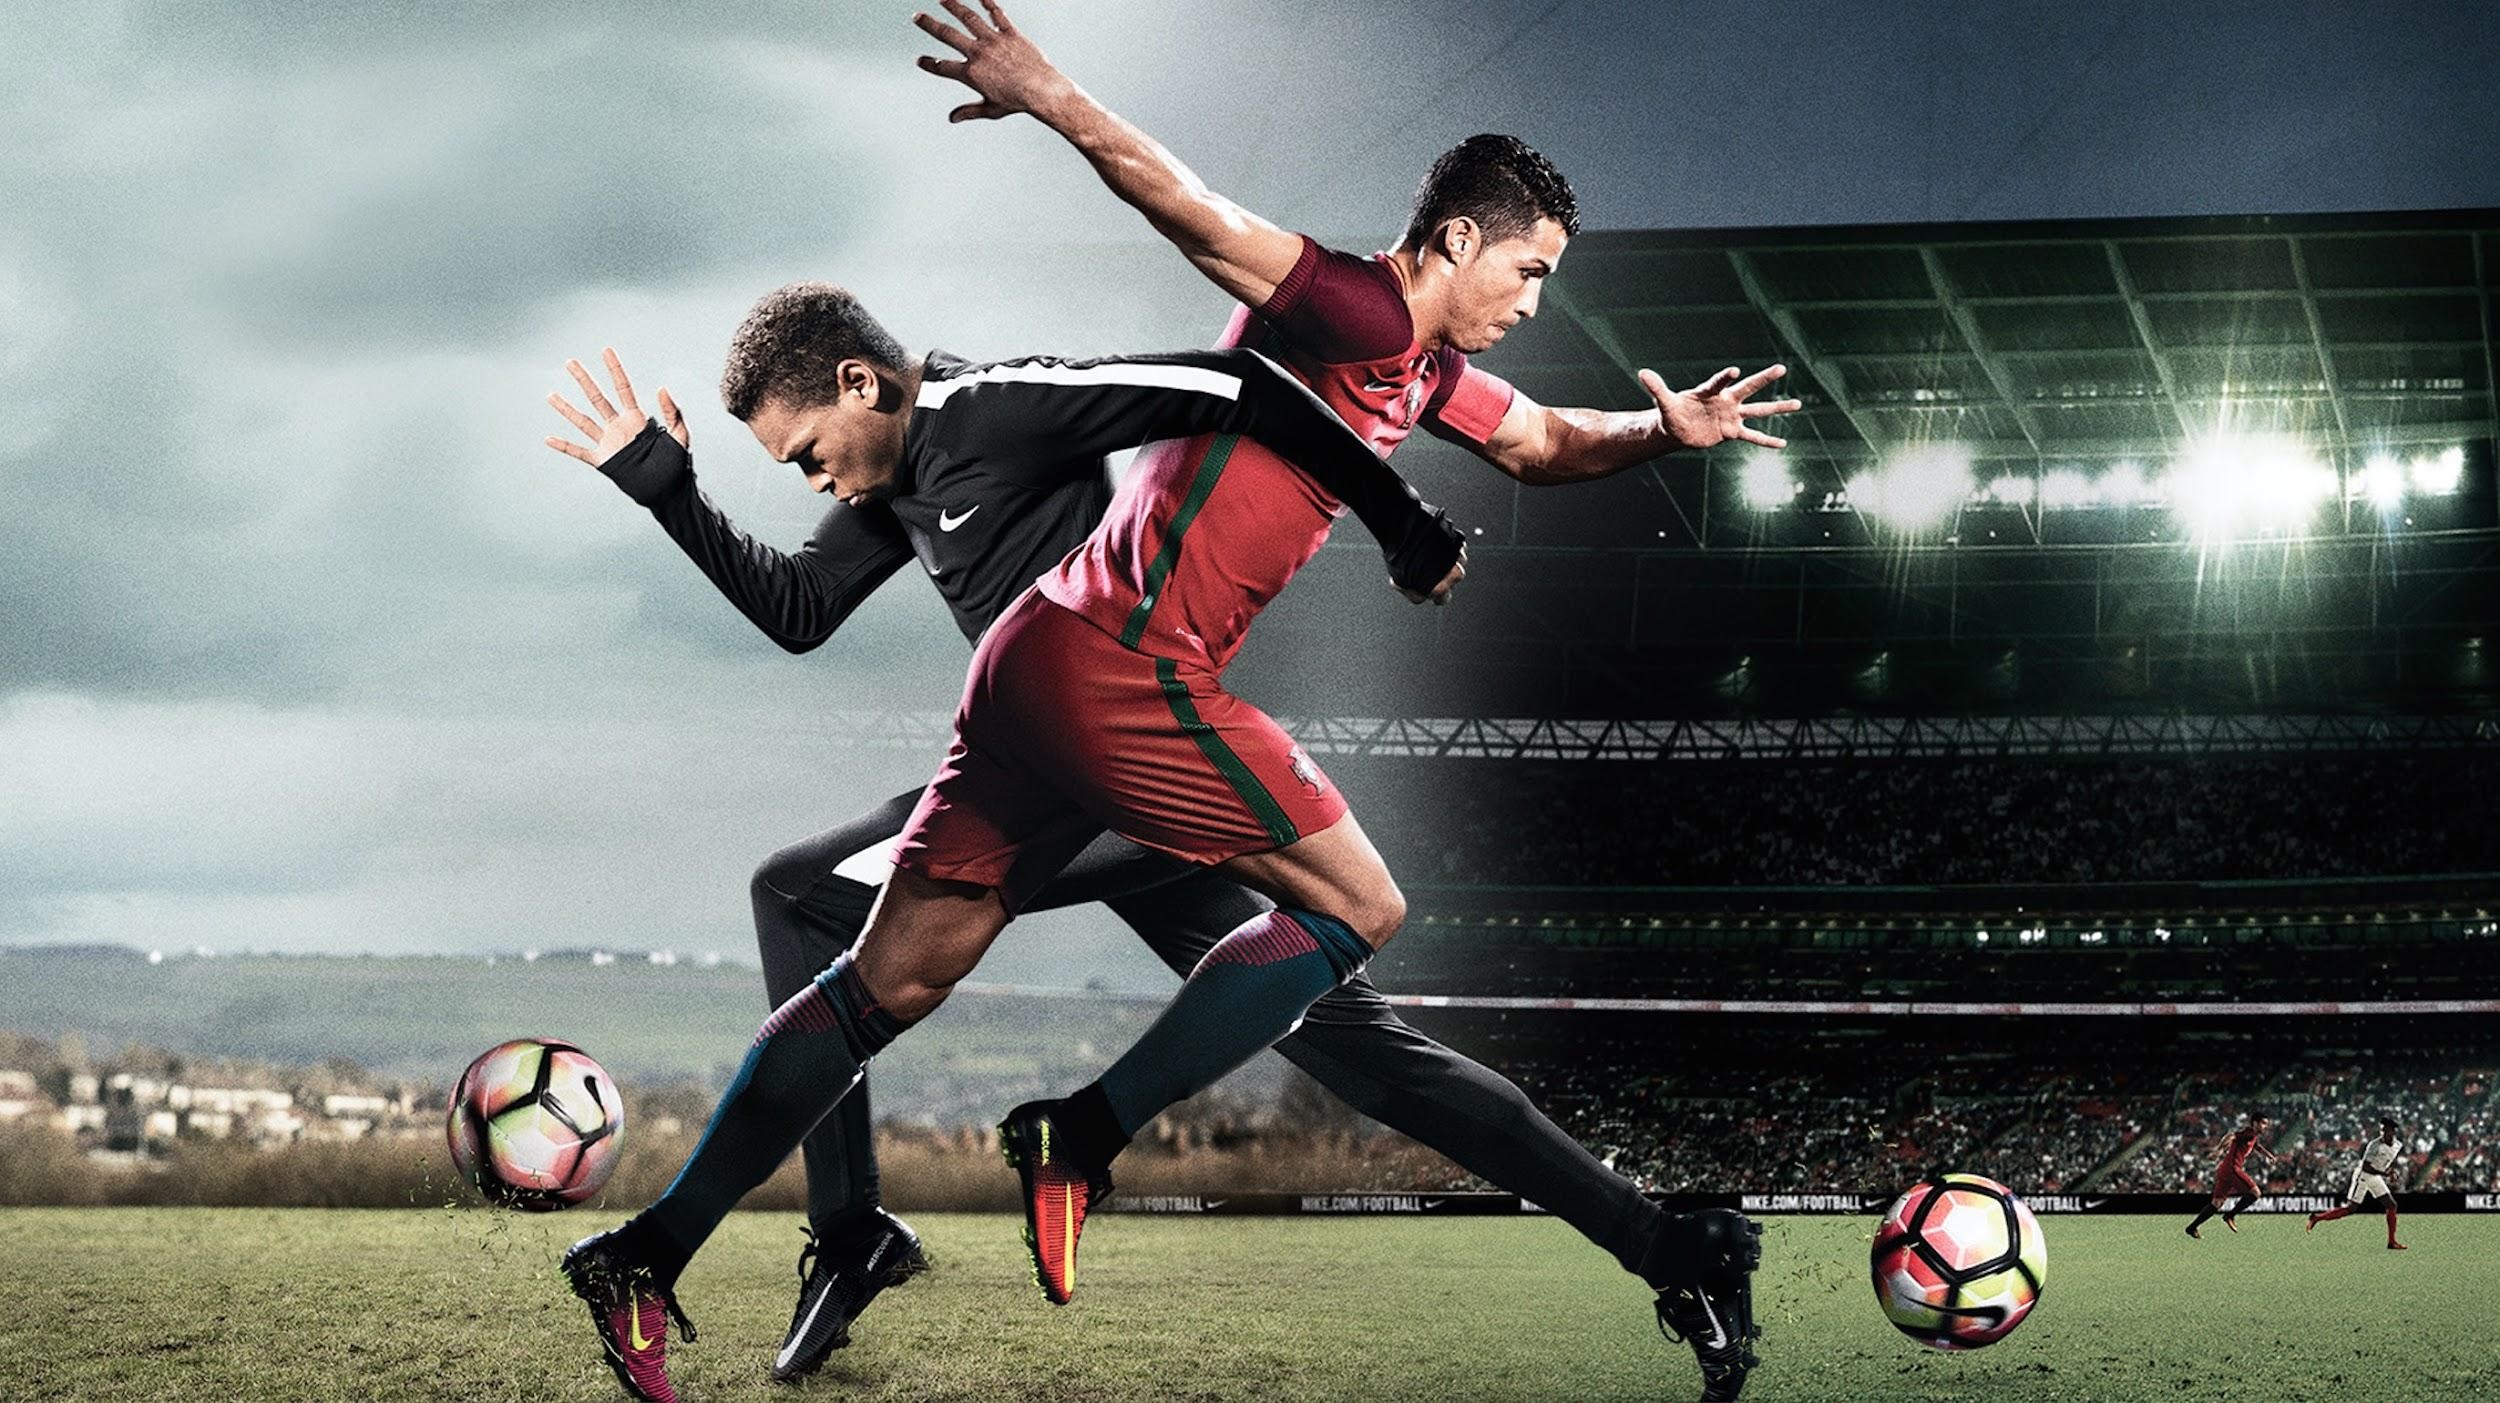 Nike Football Presents “The Switch”, Featuring Cristiano Ronaldo - Thumb